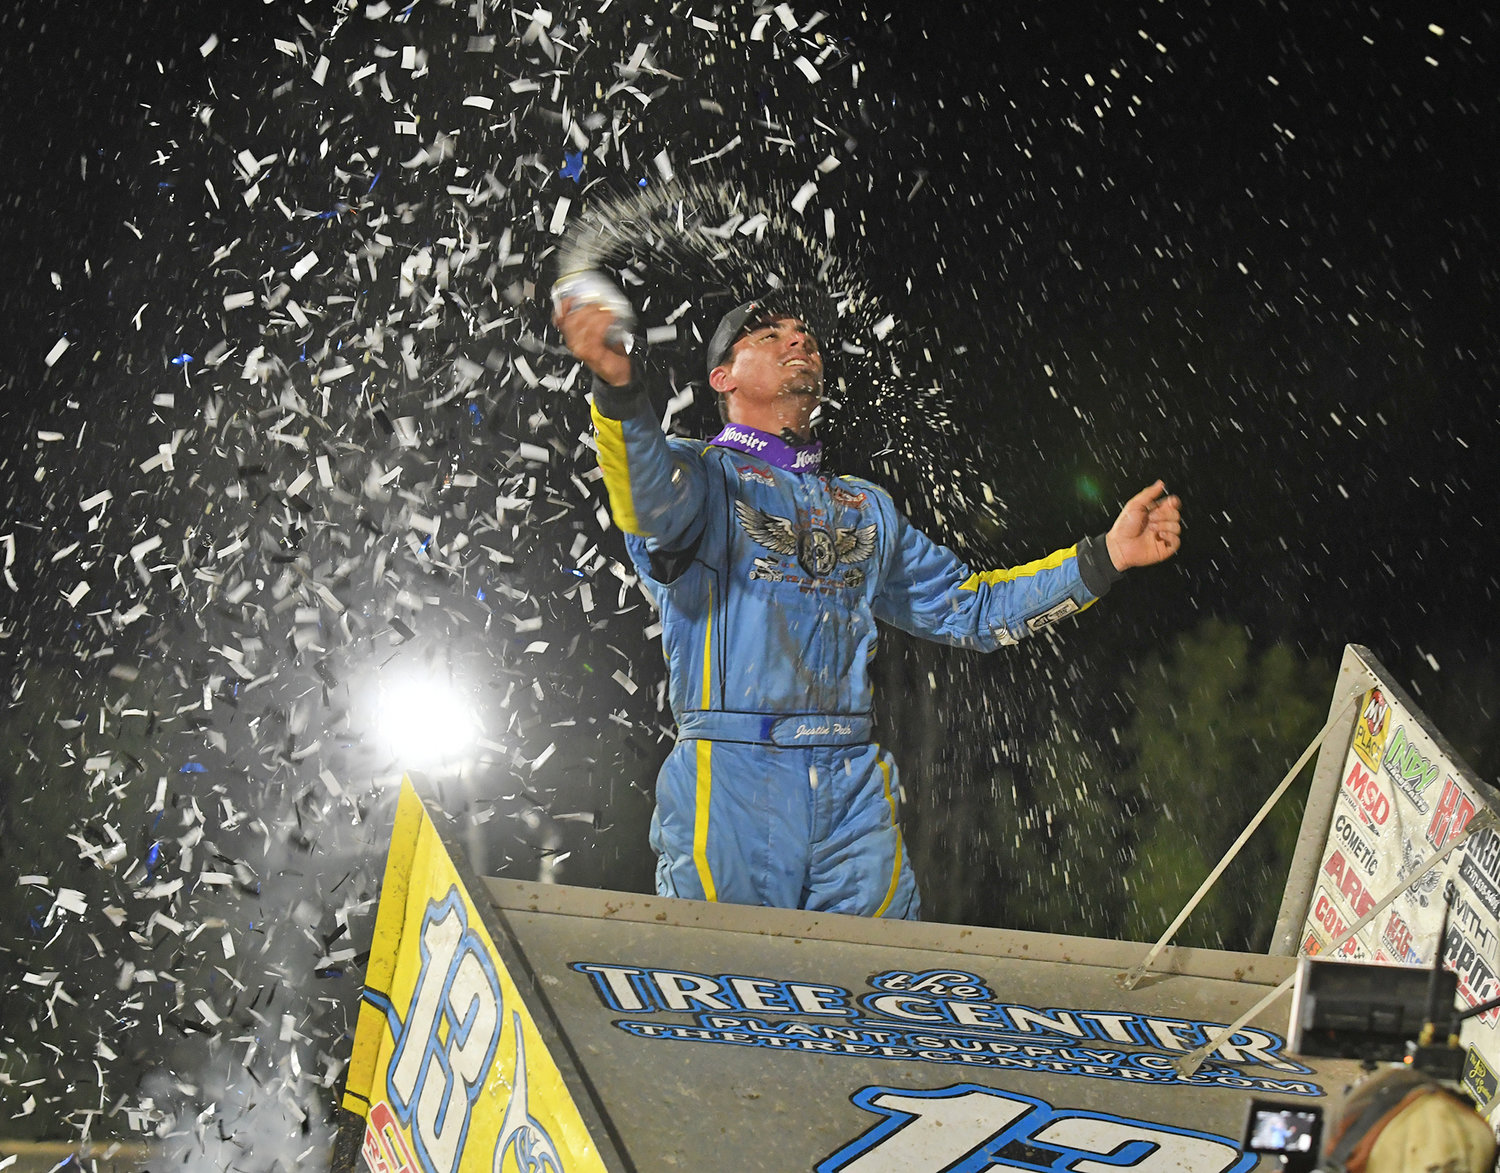 Justin Peck celebrates his Tezo All-Star series win Saturday night at Utica-Rome Speedway.